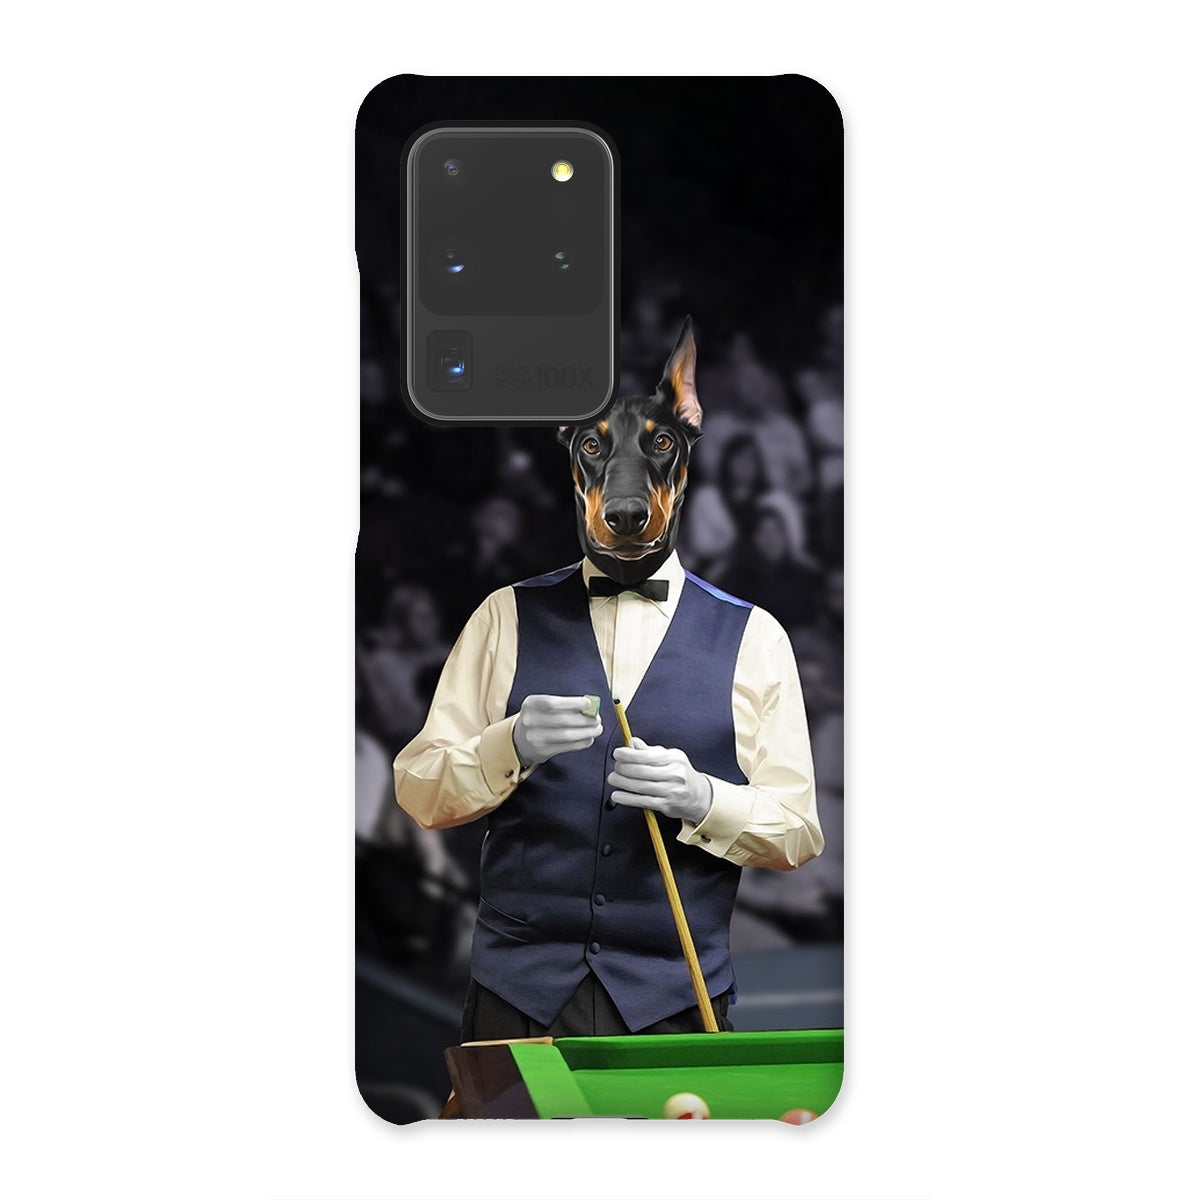 The Snooker Player: Custom Pet Phone Case